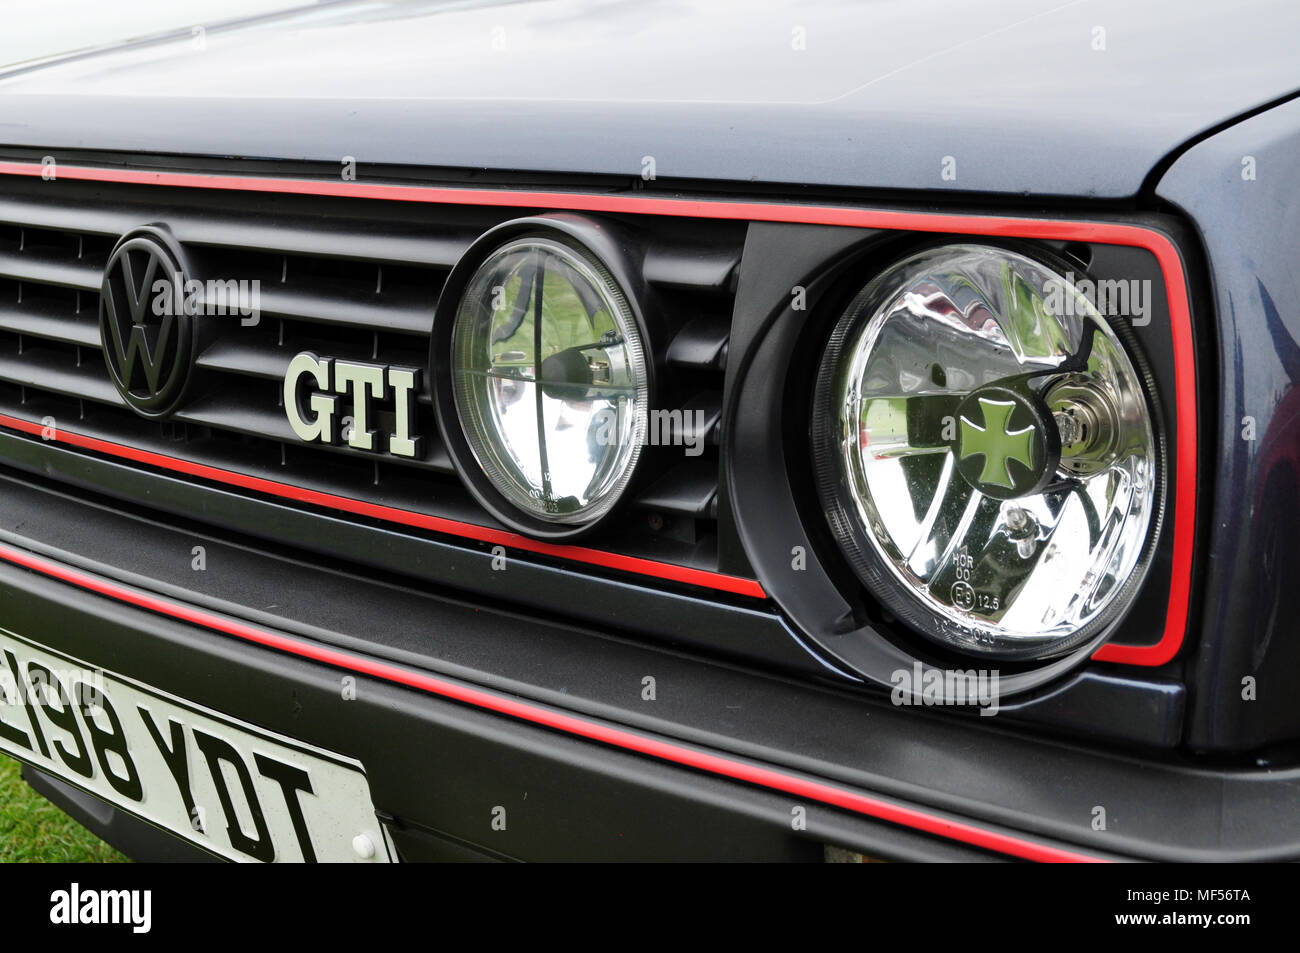 VW Gti grille Stock Photo - Alamy